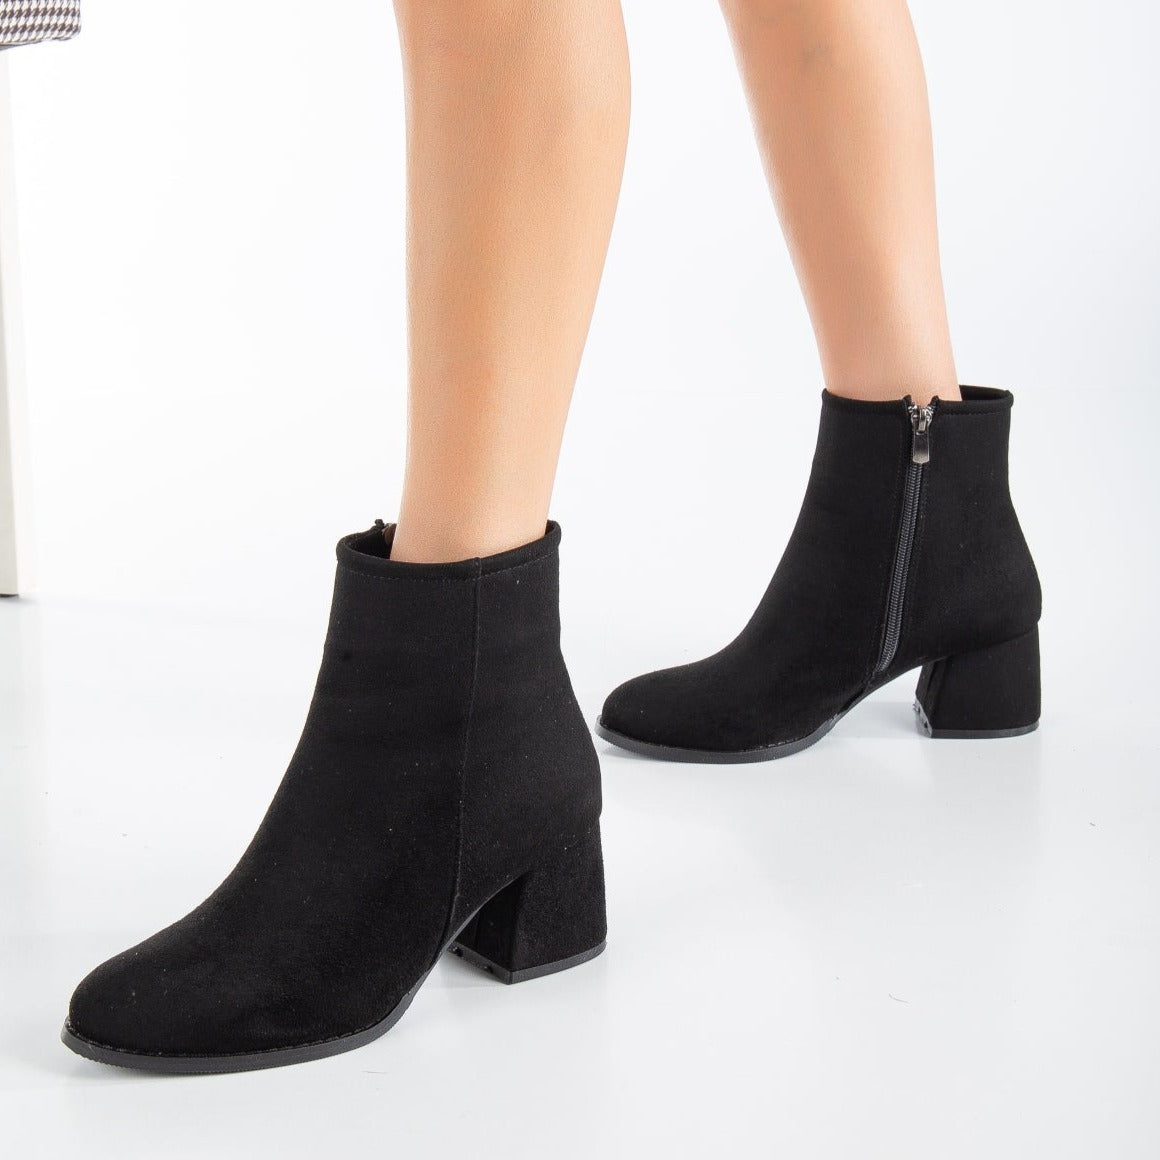 Linette - Black Suede Ankle Boots